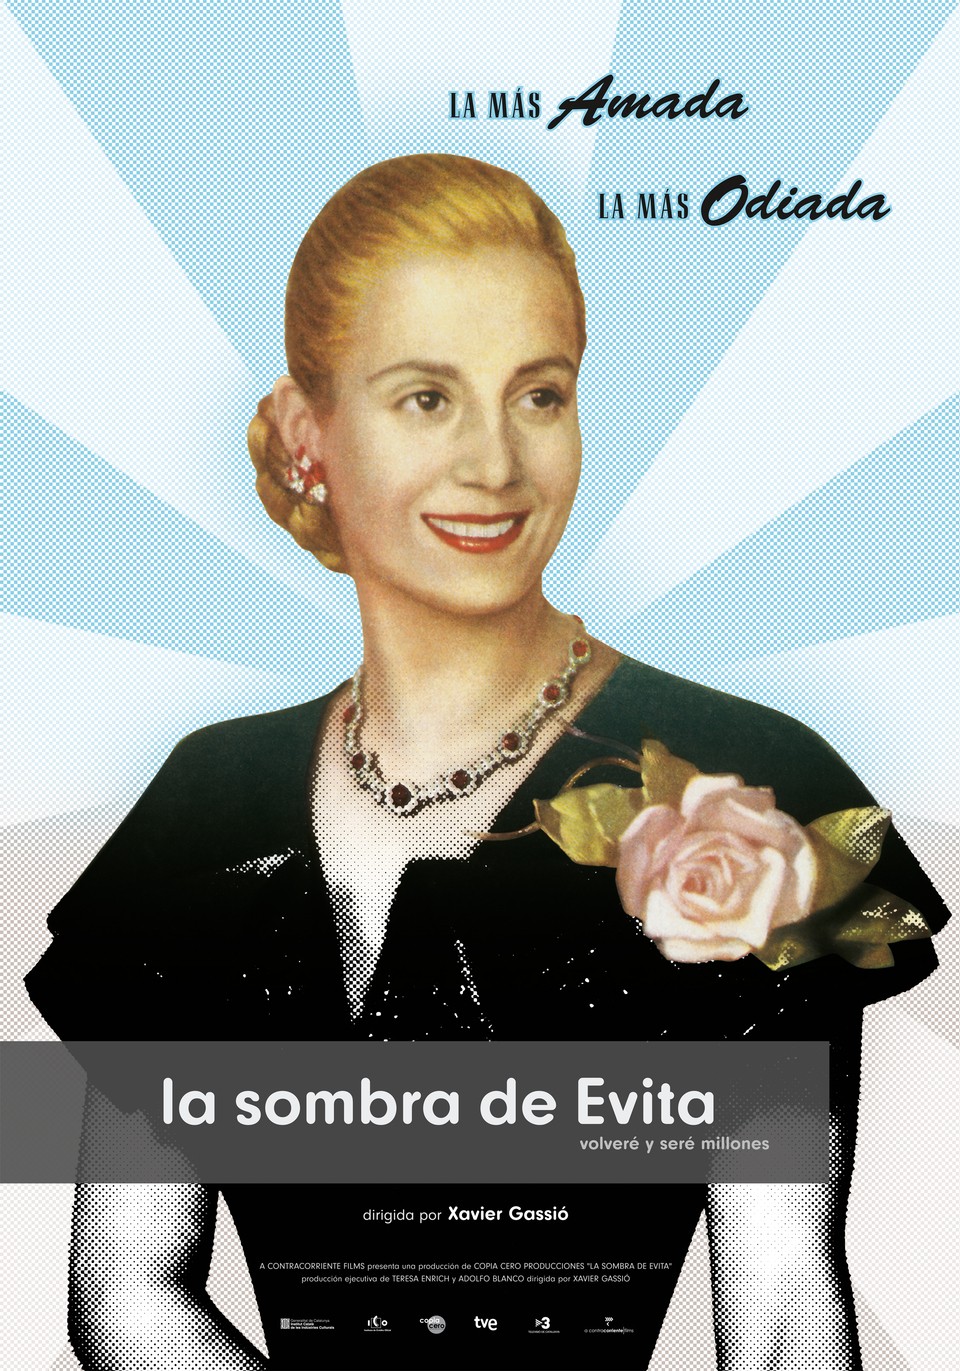 Extra Large Movie Poster Image for La sombra de Evita (Volveré y seré millones) 